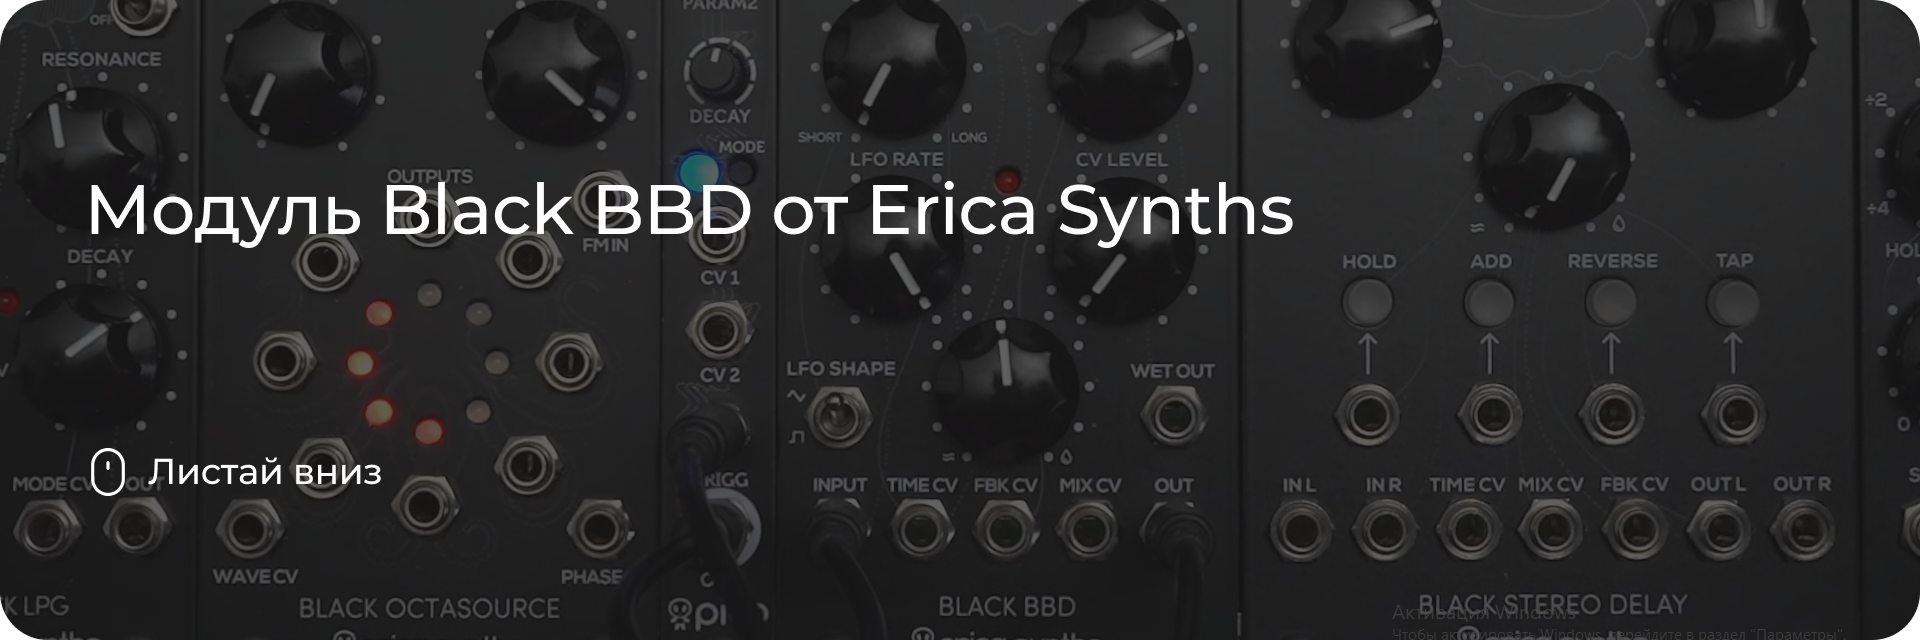 Модуль Black BBD от Erica Synths